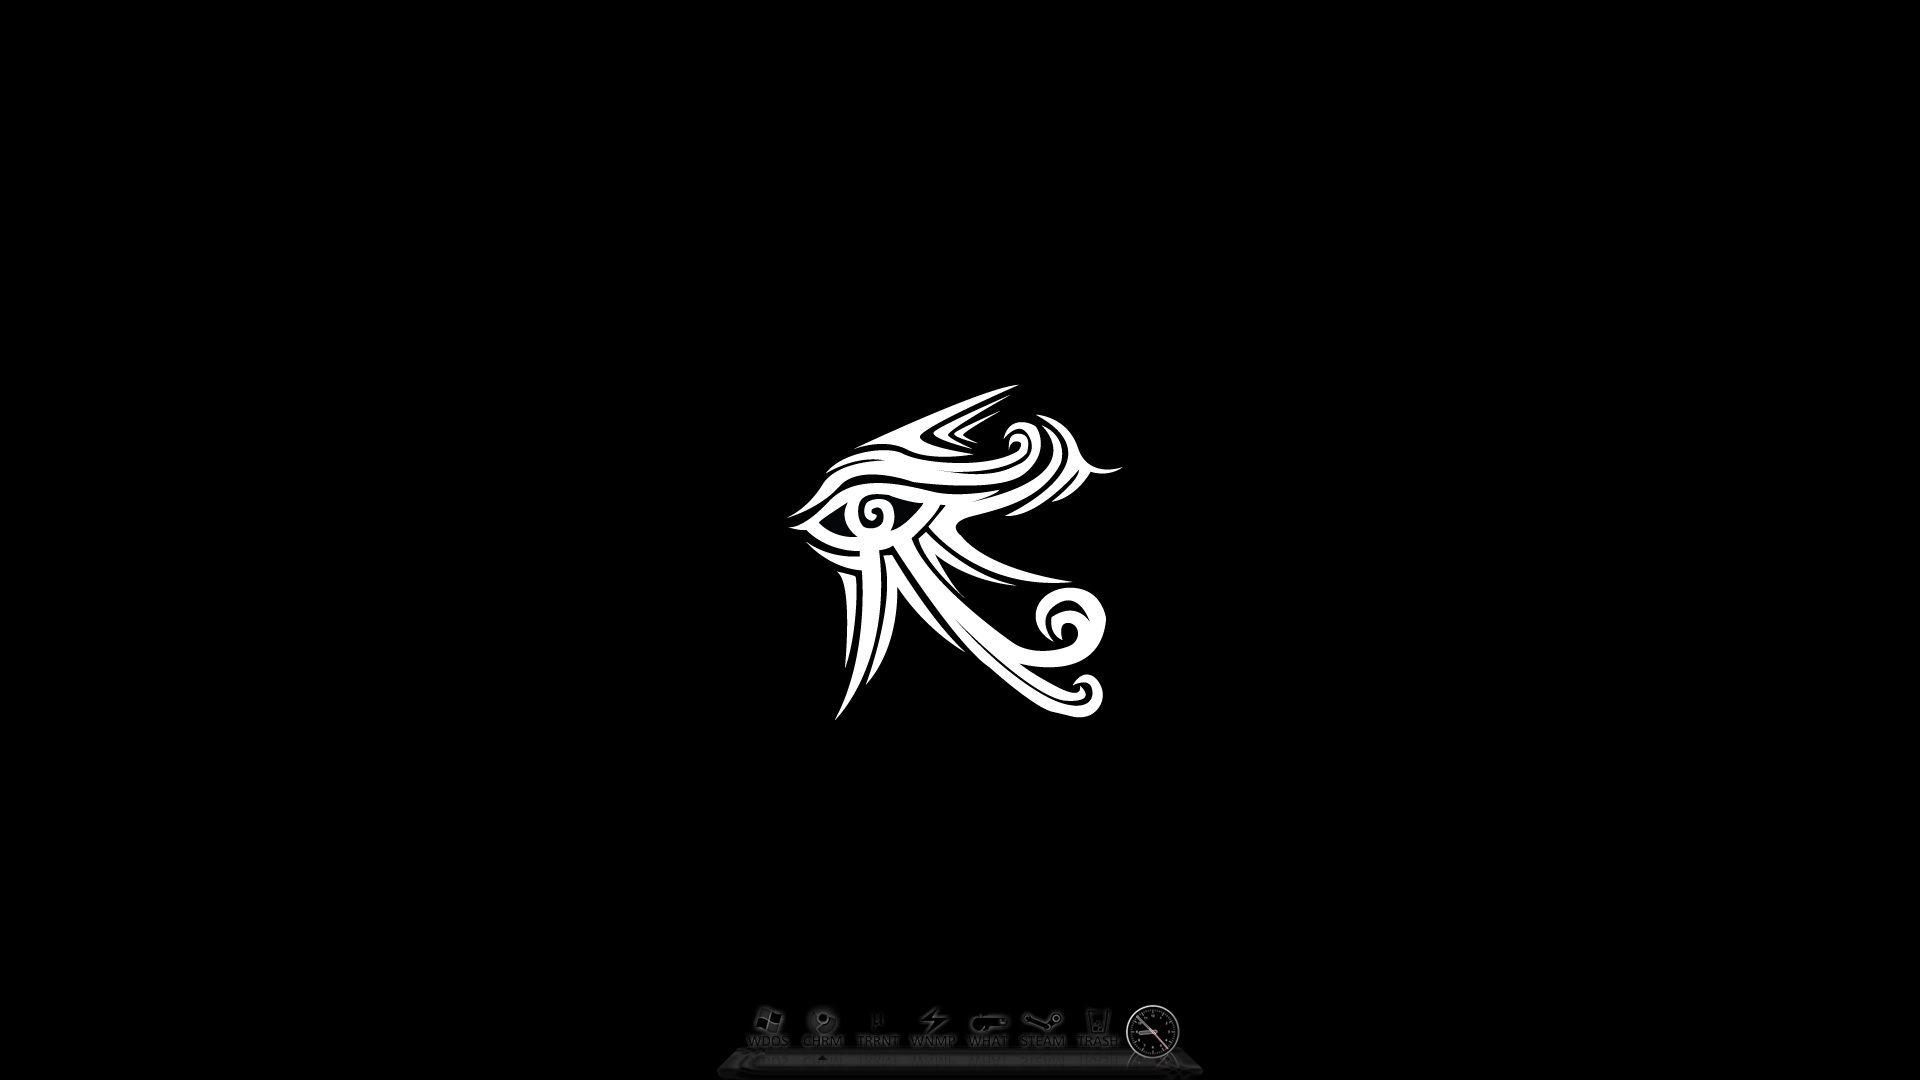 Eye of horus logo on dark background Royalty Free Vector